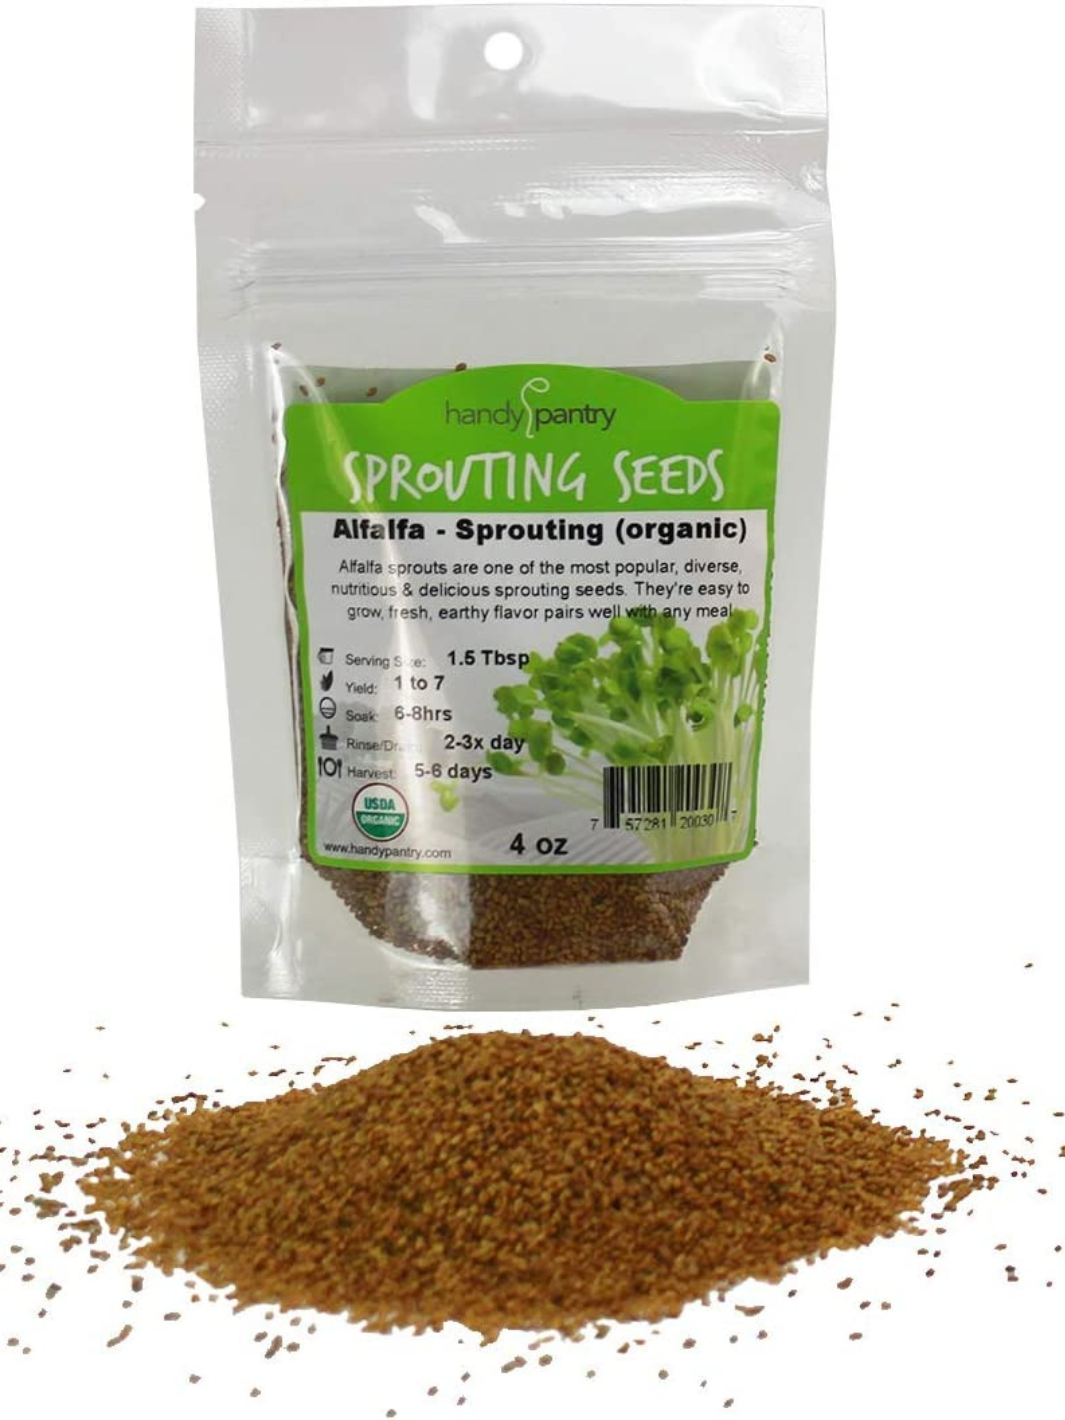 Handy Pantry Organic Alfalfa Sprouting Seeds in 4oz Bag